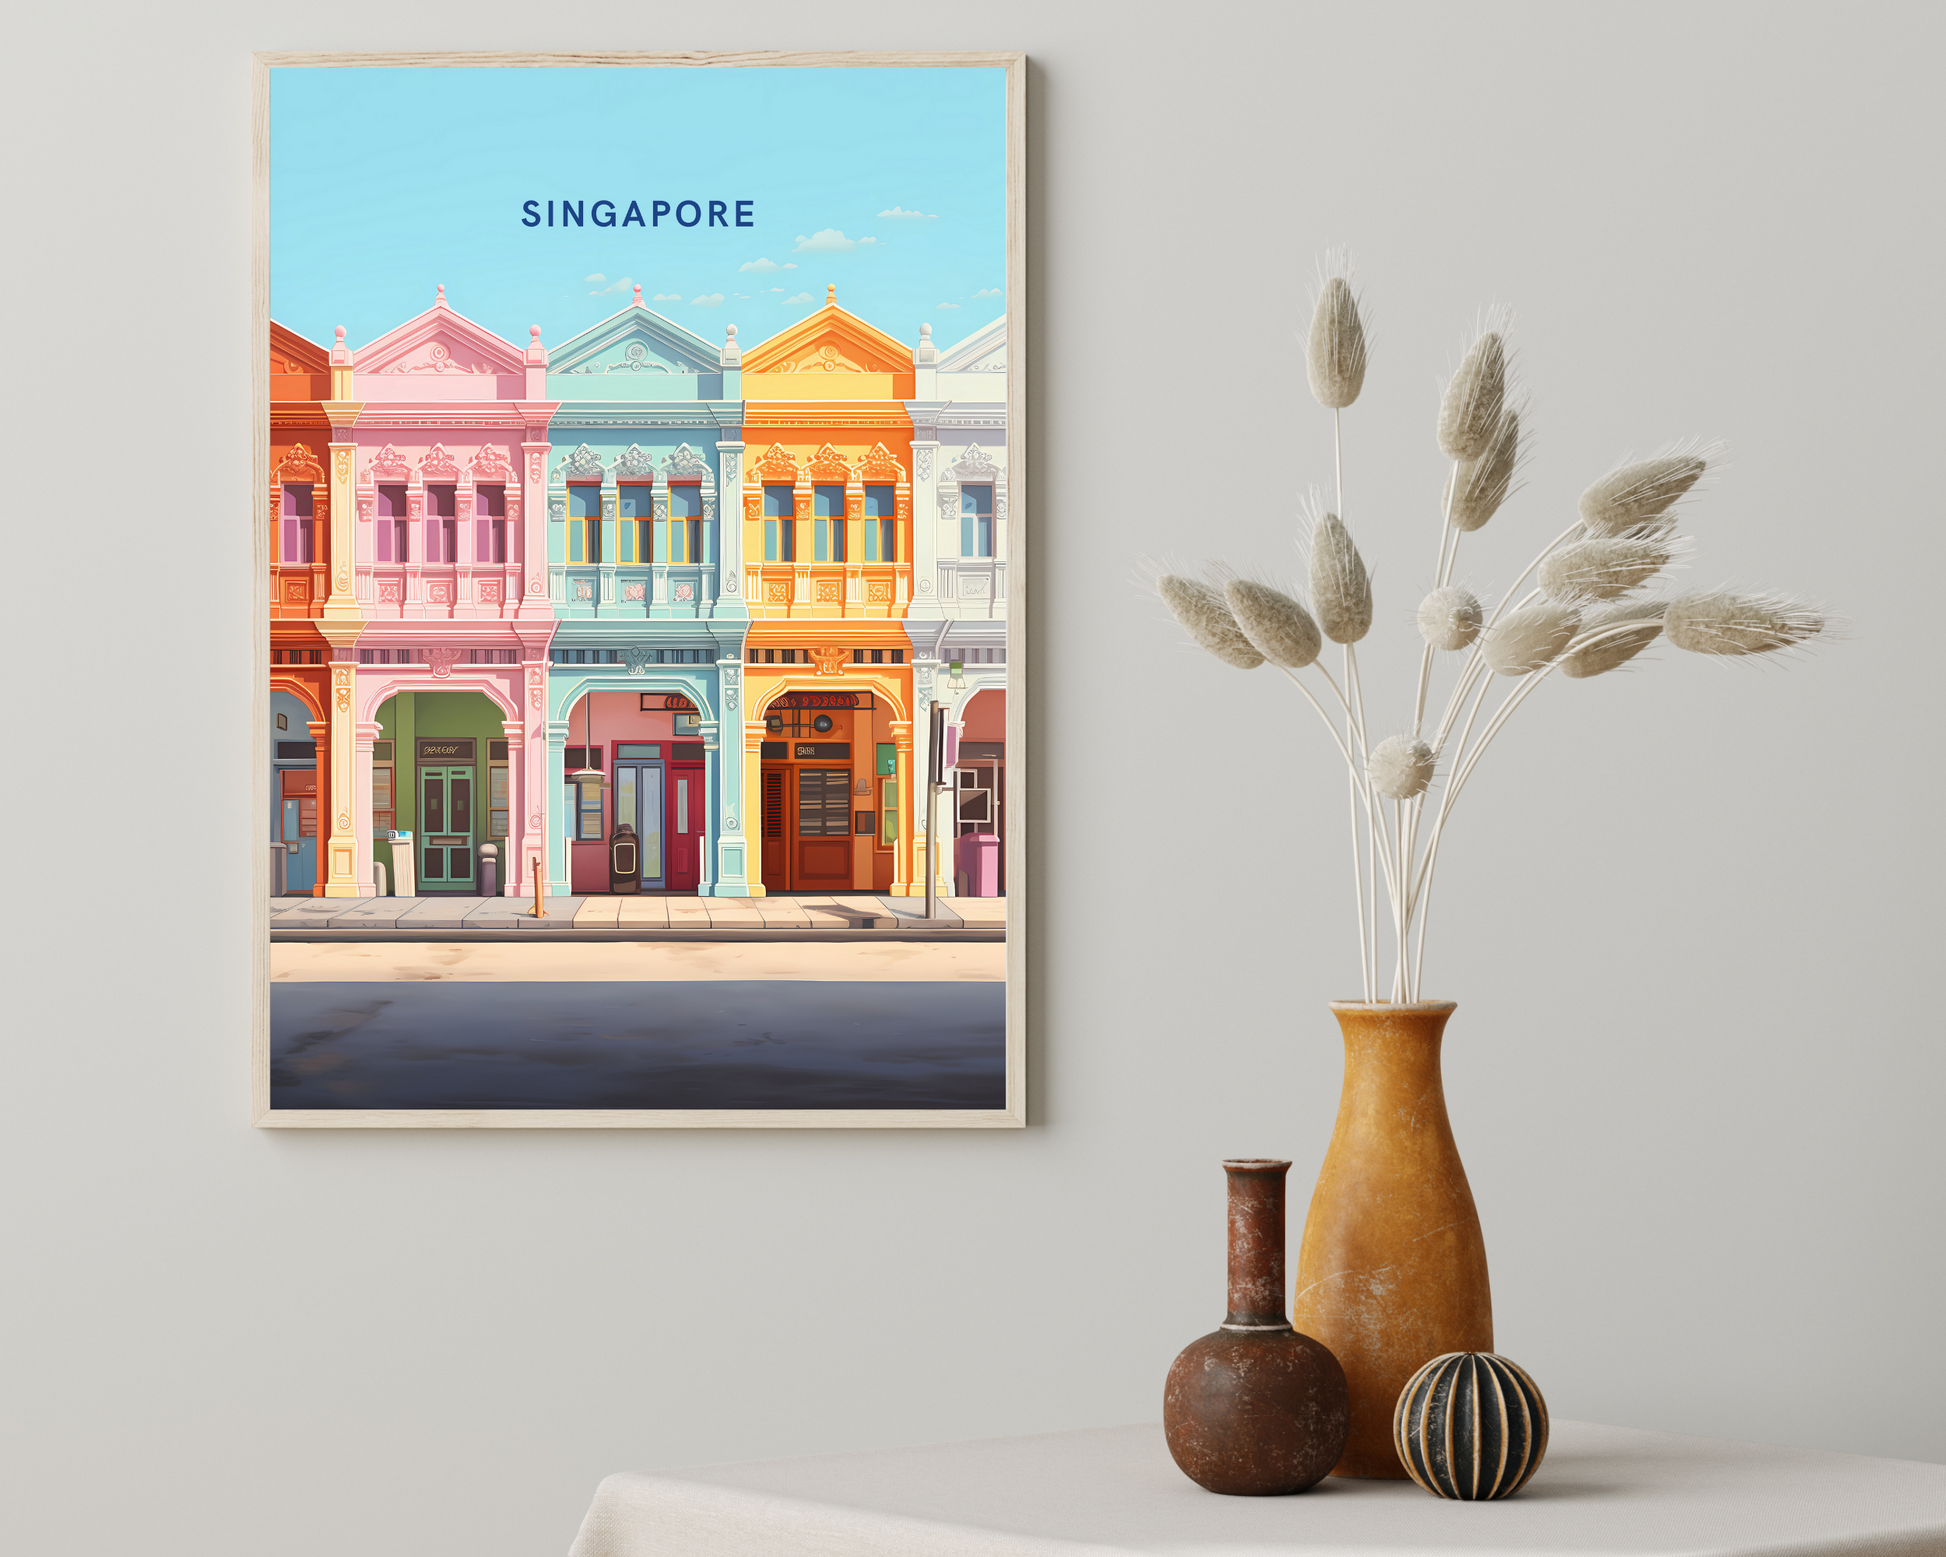 Singapore Shop Houses Travel Poster Print - Pitchers Design